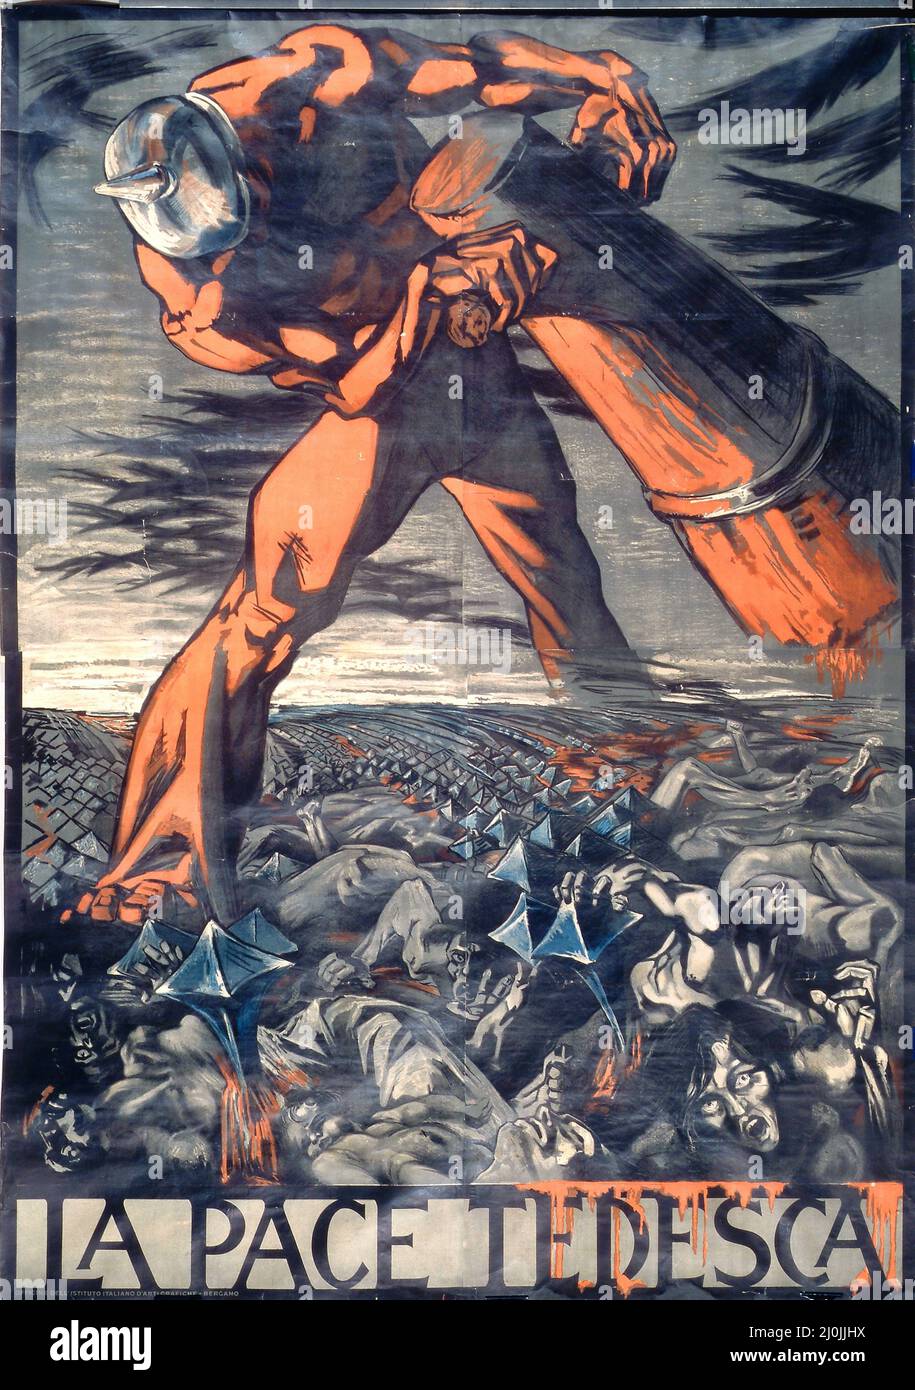 La pace tedesca - The German Peace. Canevari, Silvio, 1893-1931 Artist. Bergamo, Italy : Italian Institute of Graphic Arts, 1918. Stock Photo